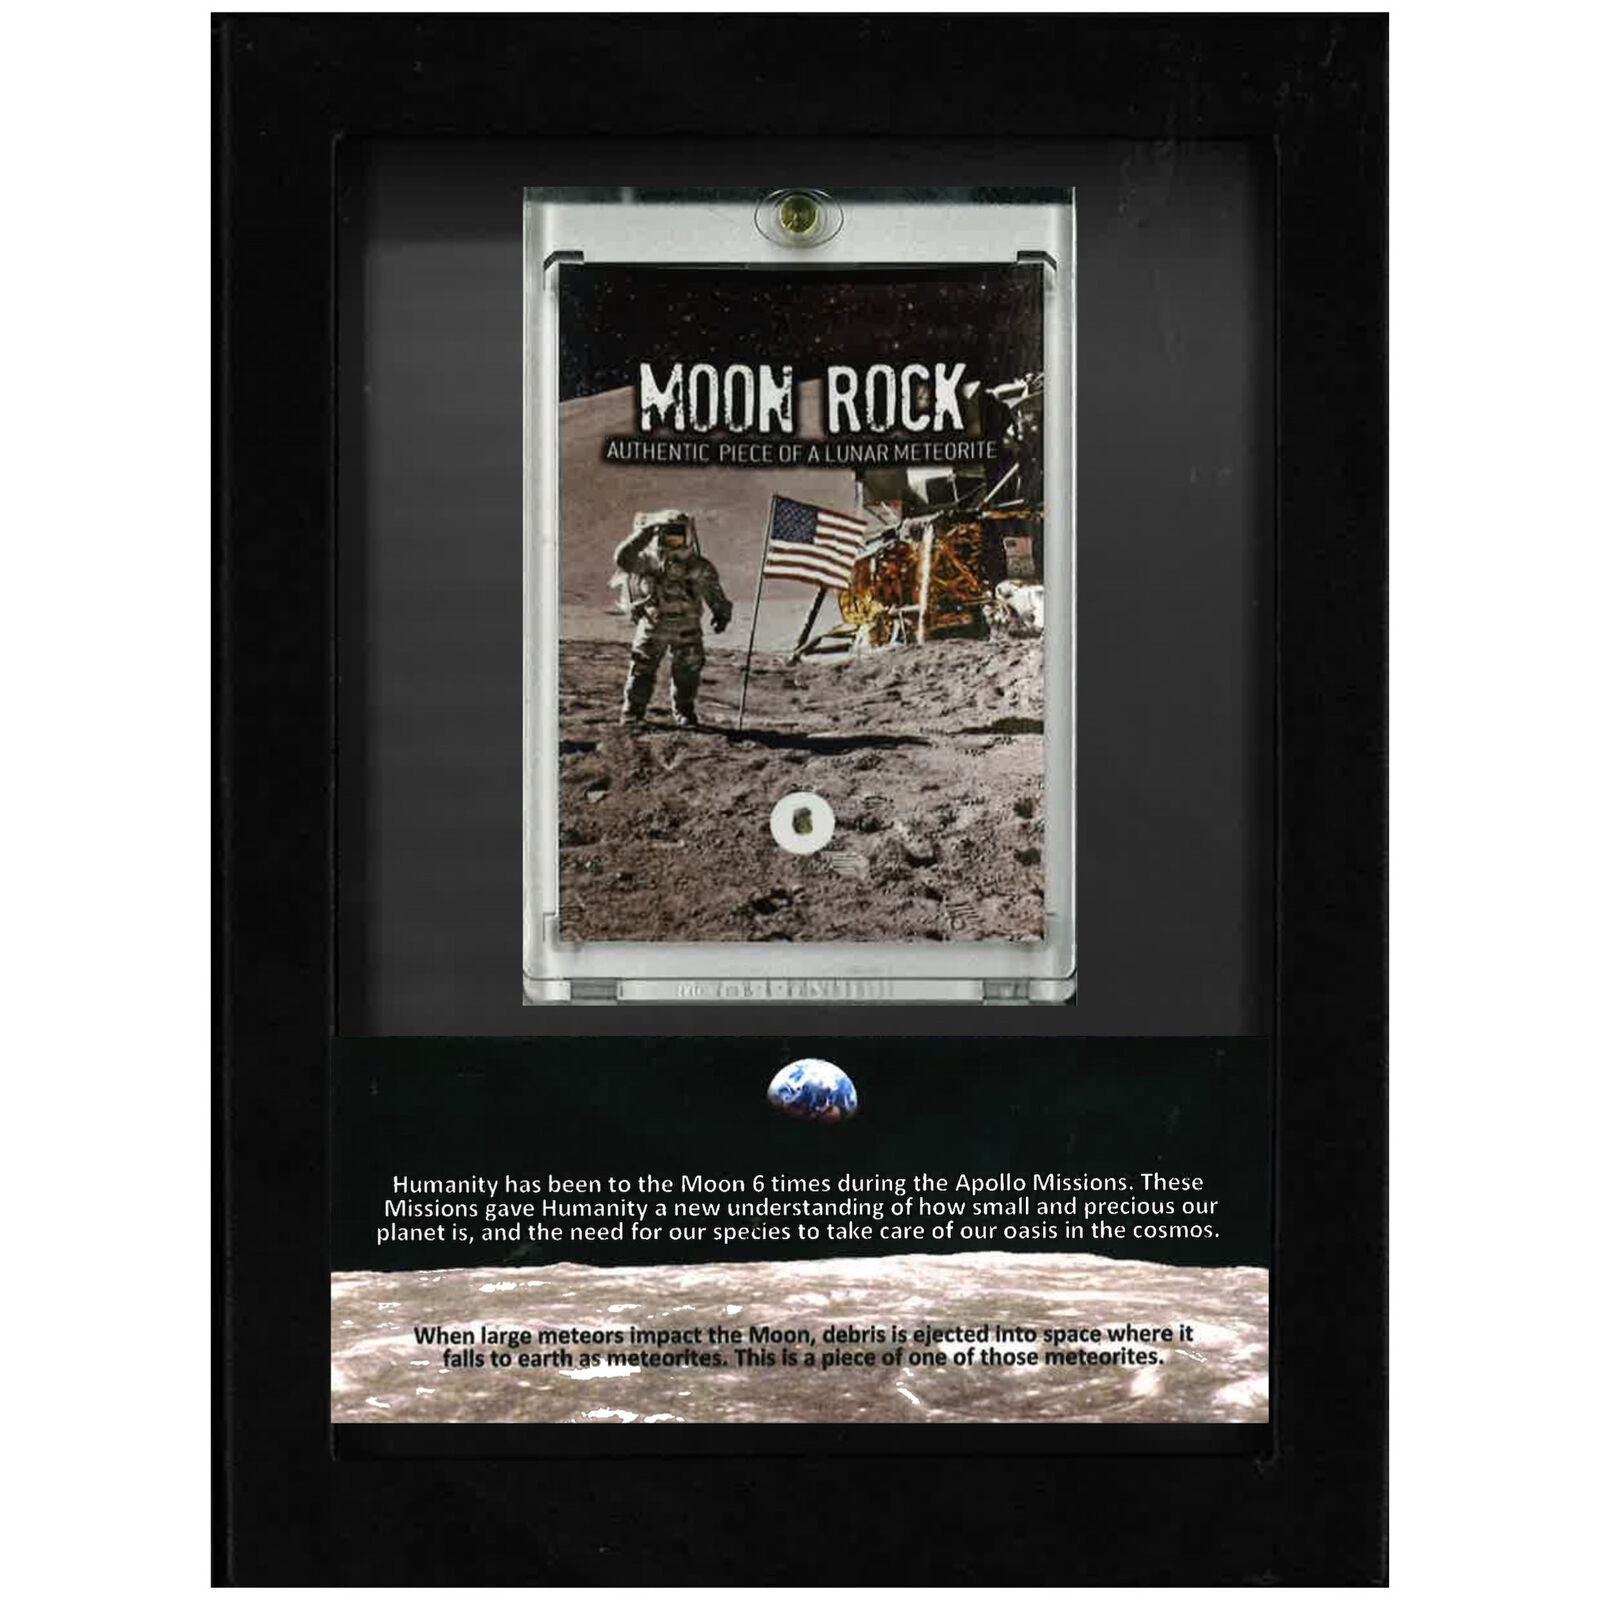 Moon Rock - Authentic Piece of a Lunar Meteorite